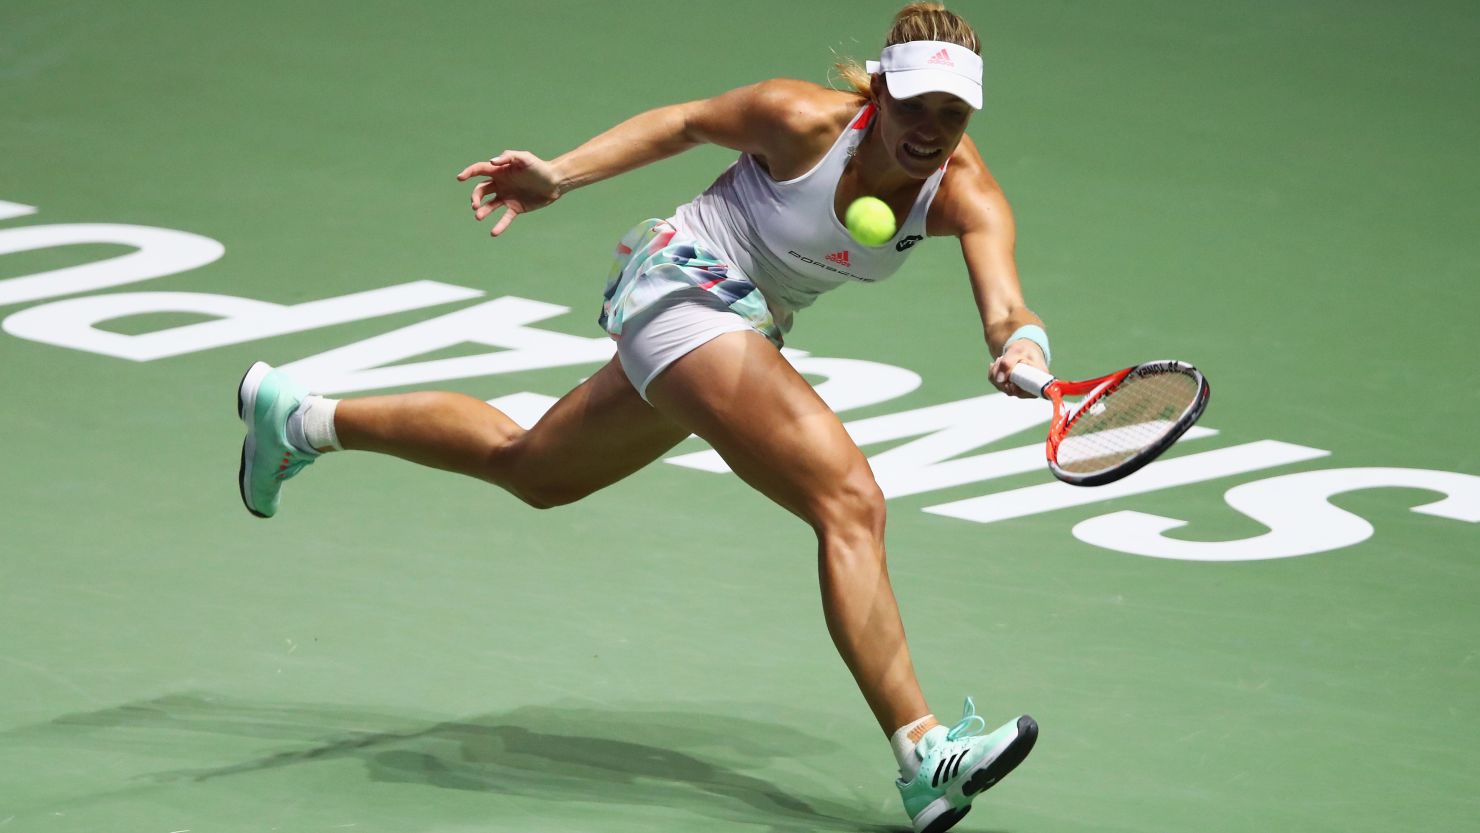 Angelique Kerber cruised past Agnieszka Radwanska to reach the WTA Finals in Singapore.